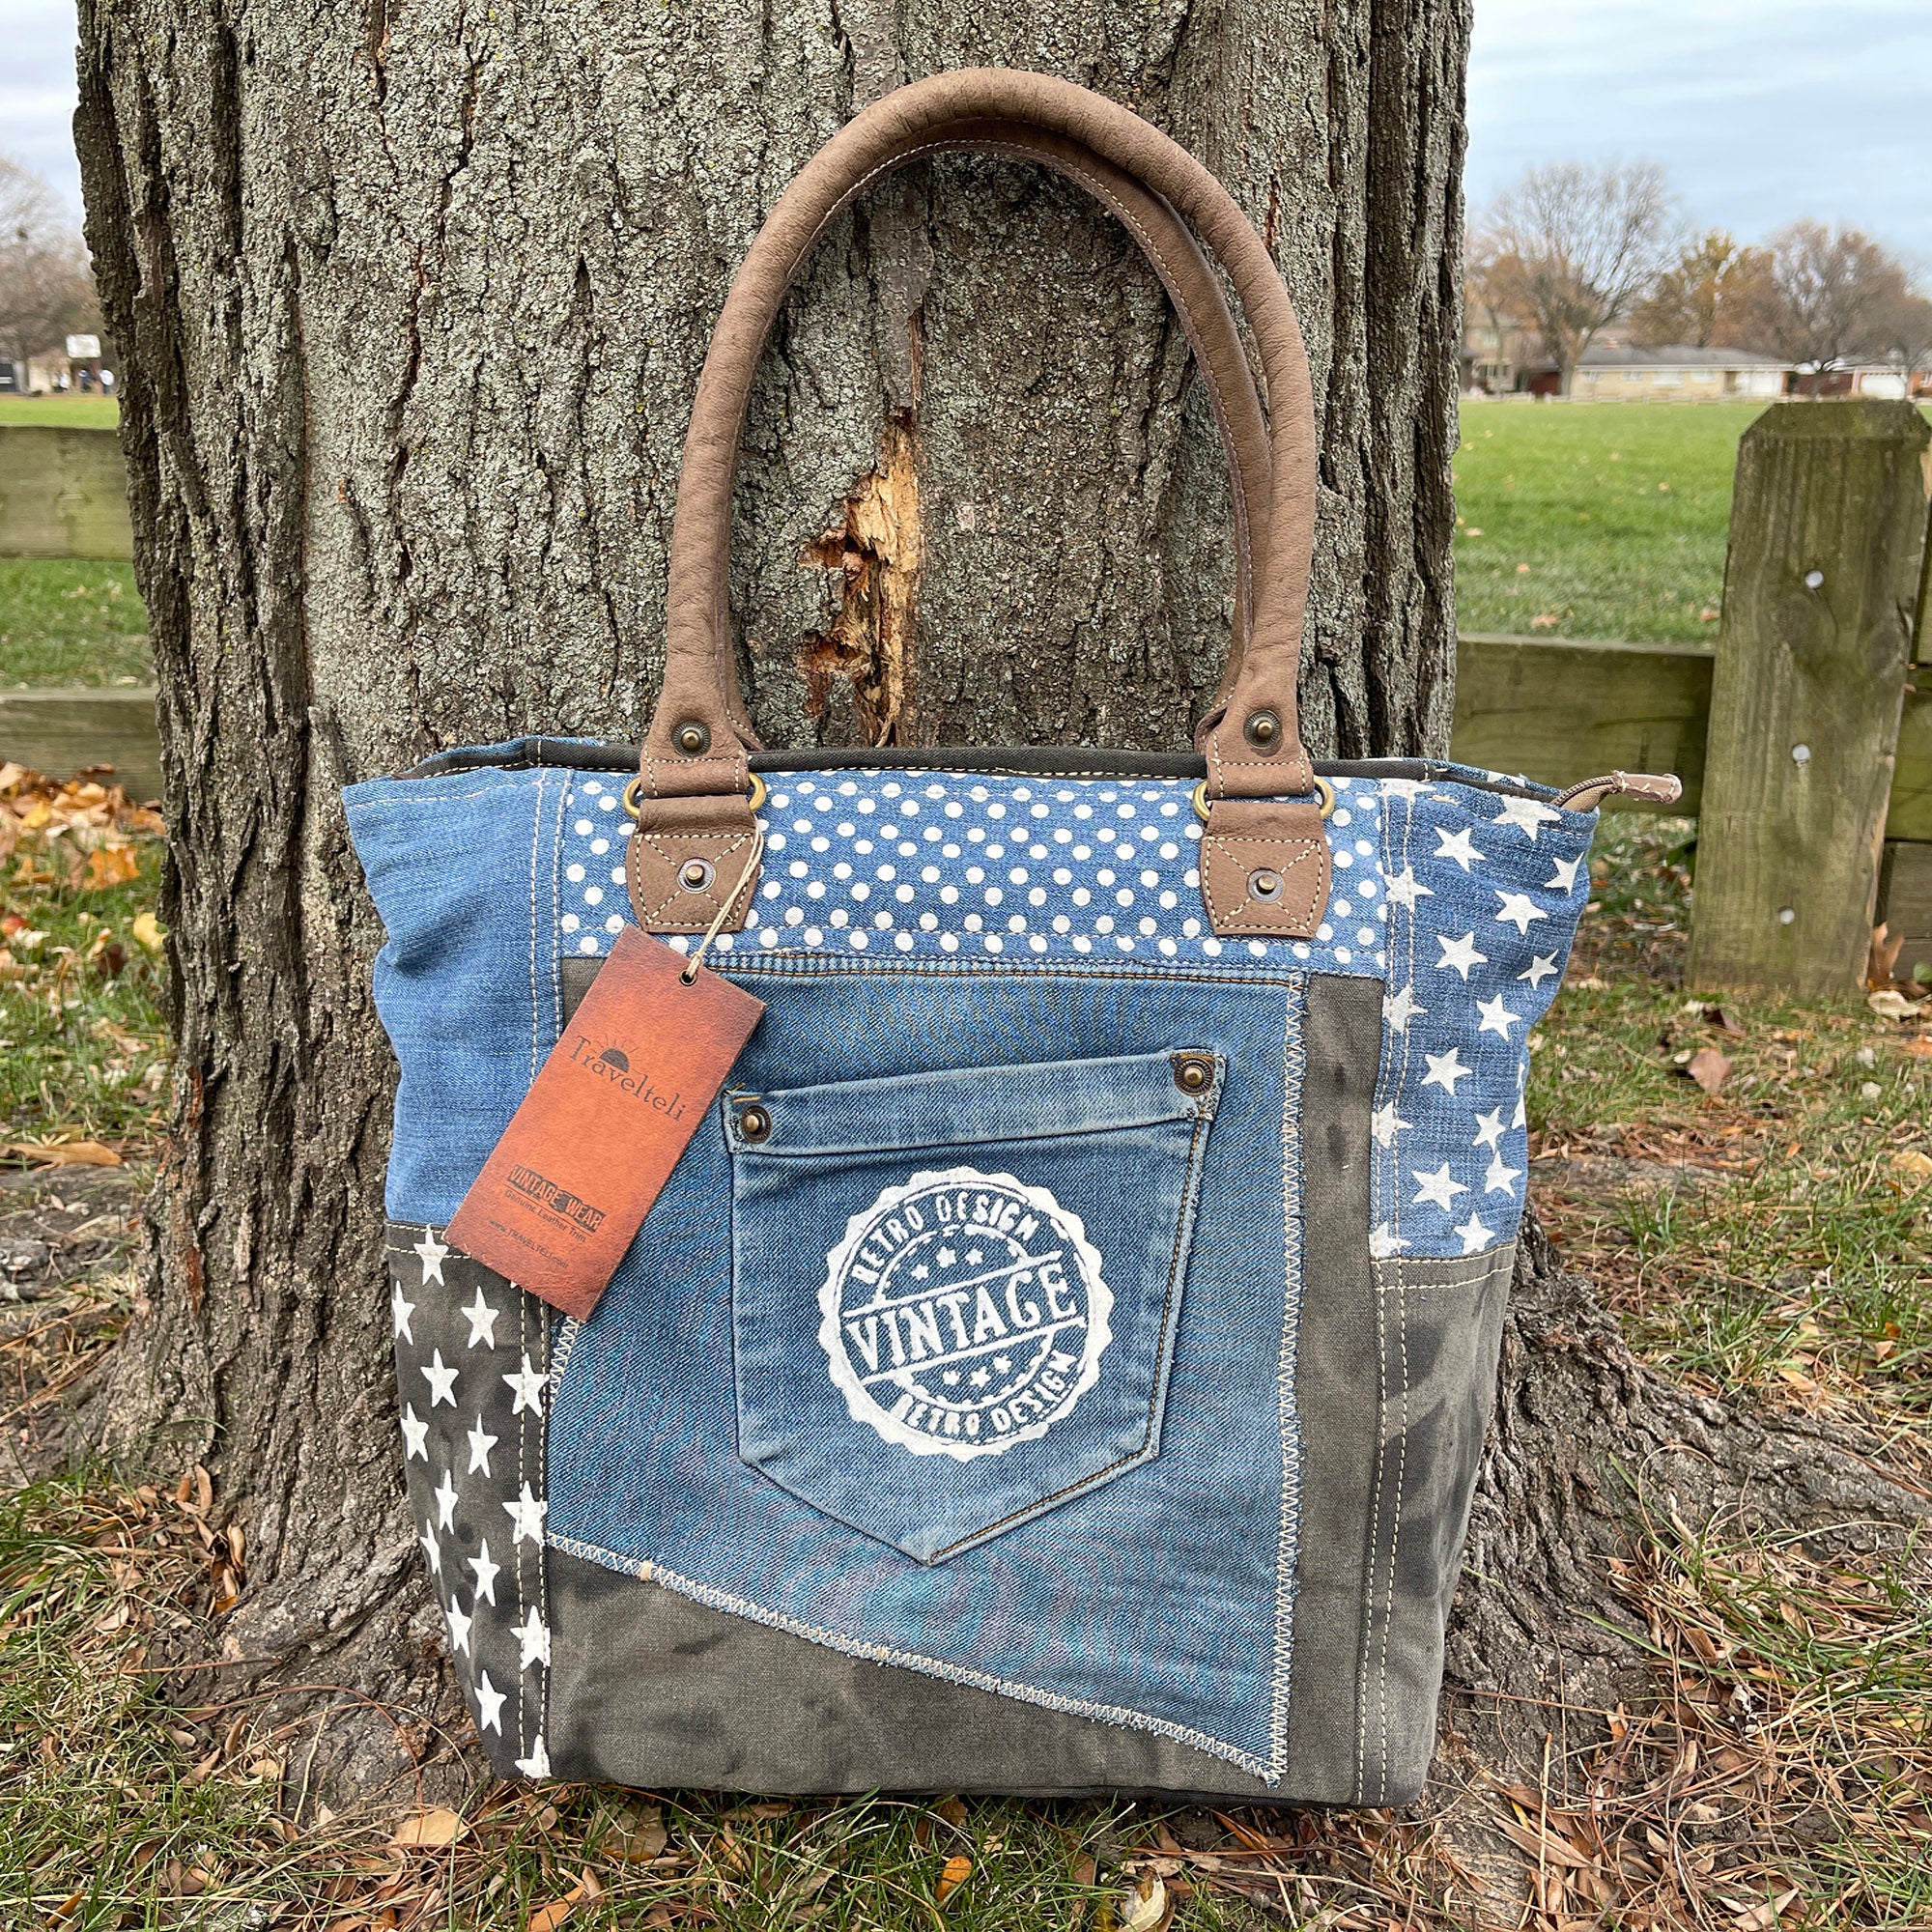 Etro bag, autumnal beautiful vintage handbag, shoulder bag, 100% original